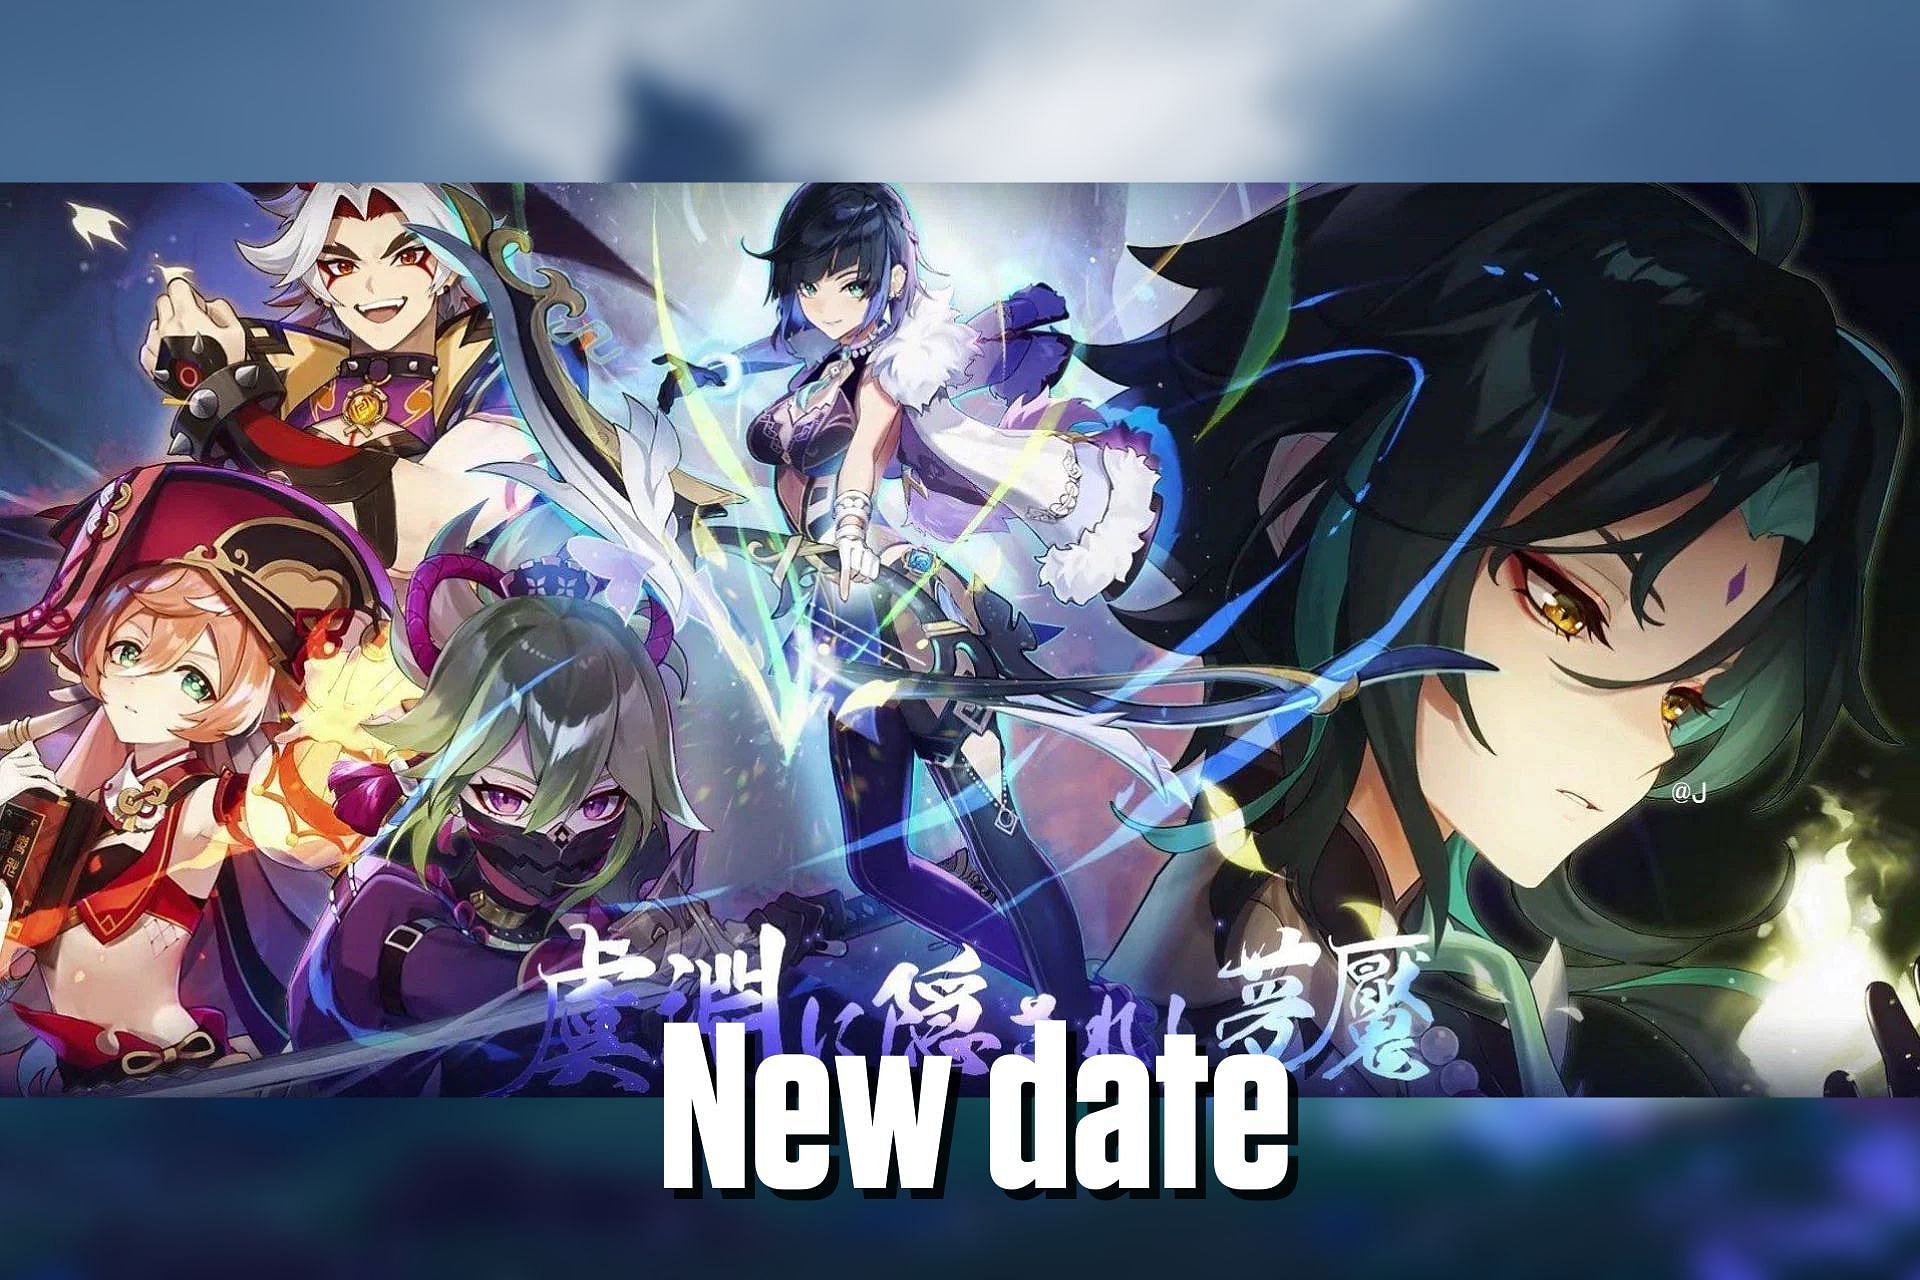 New date for Genshin Impact version 2.7 revealed by a leaker (Image via Sportskeeda)